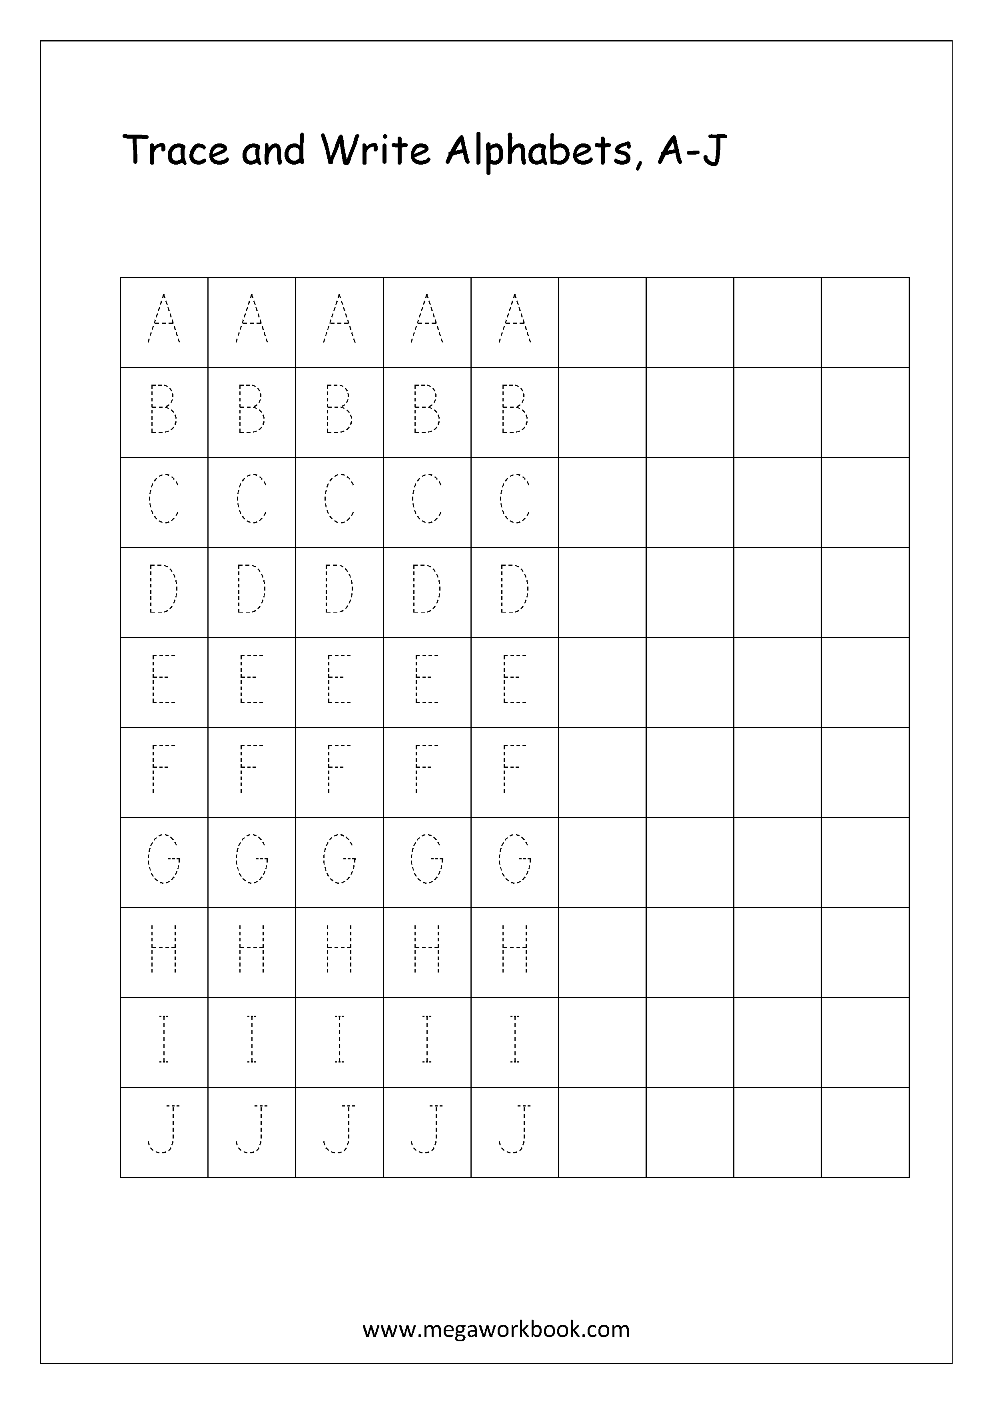 gujarati alphabet tracing worksheets